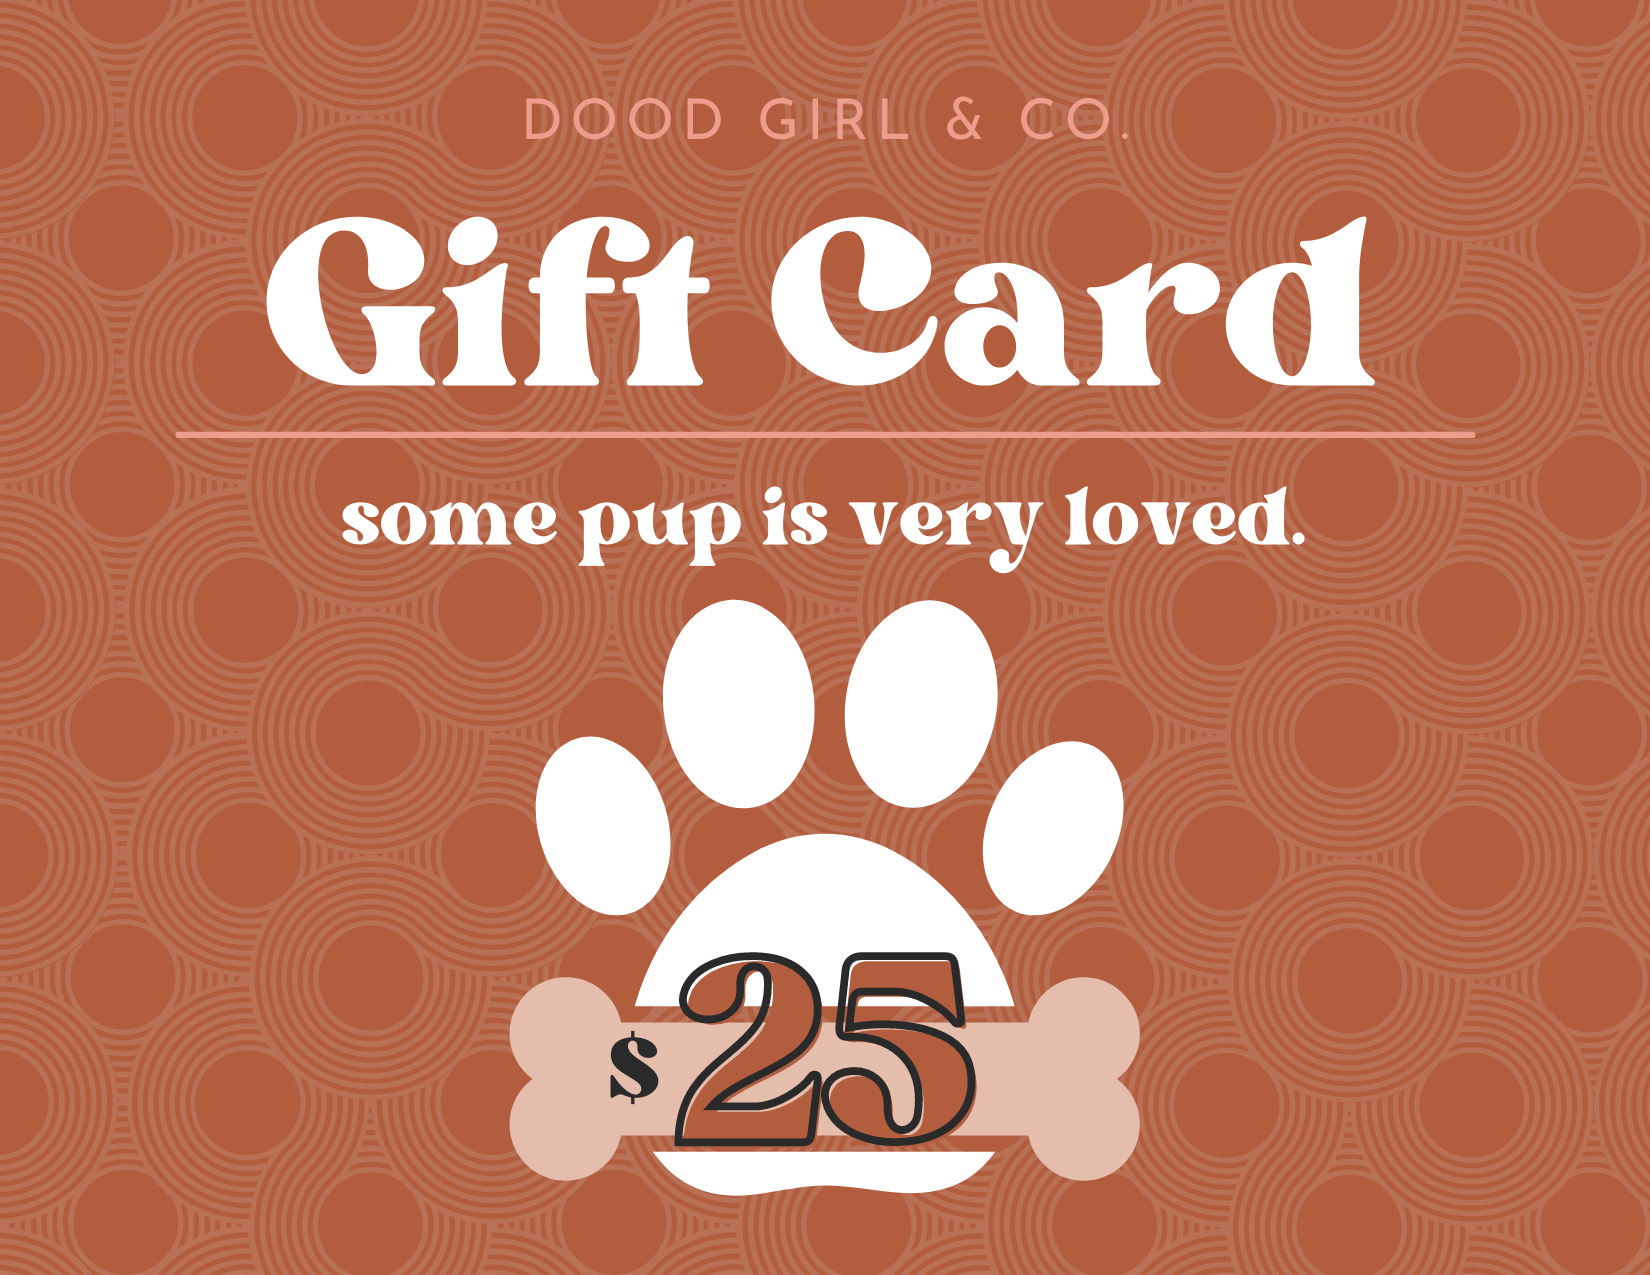 Dood Girl gift card